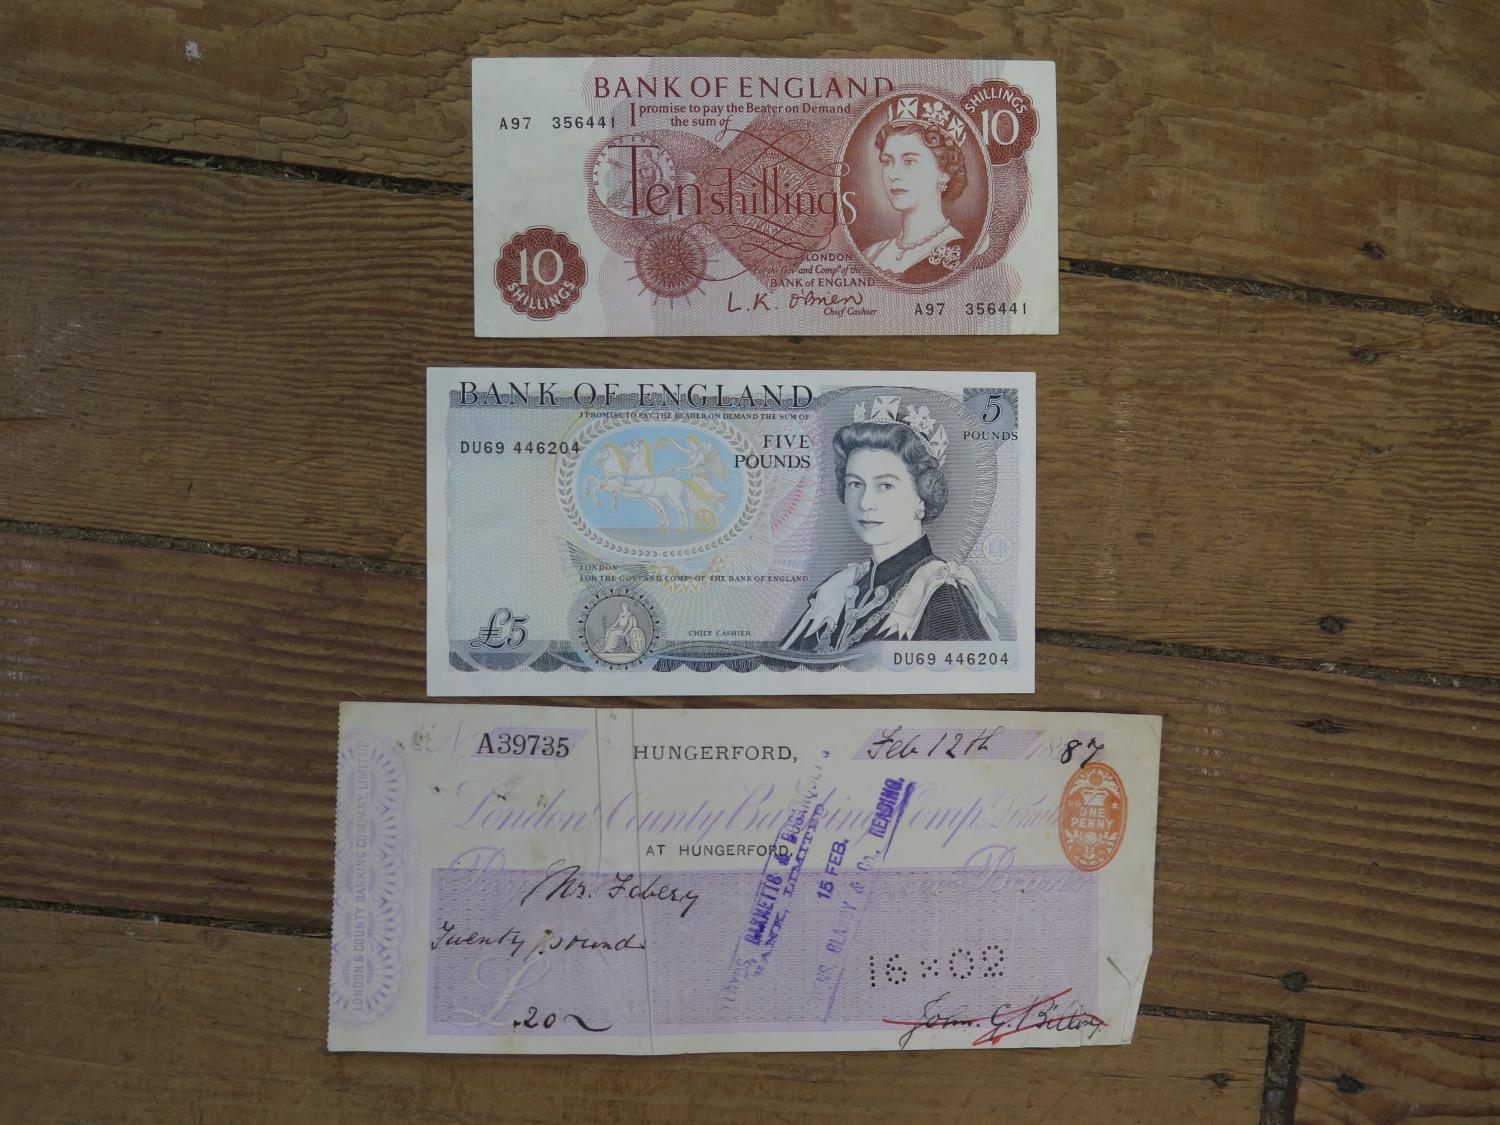 A Five Pound (£5) Banknote with error, No Chief Cashier signature, serial no. DU69 446204, a Ten